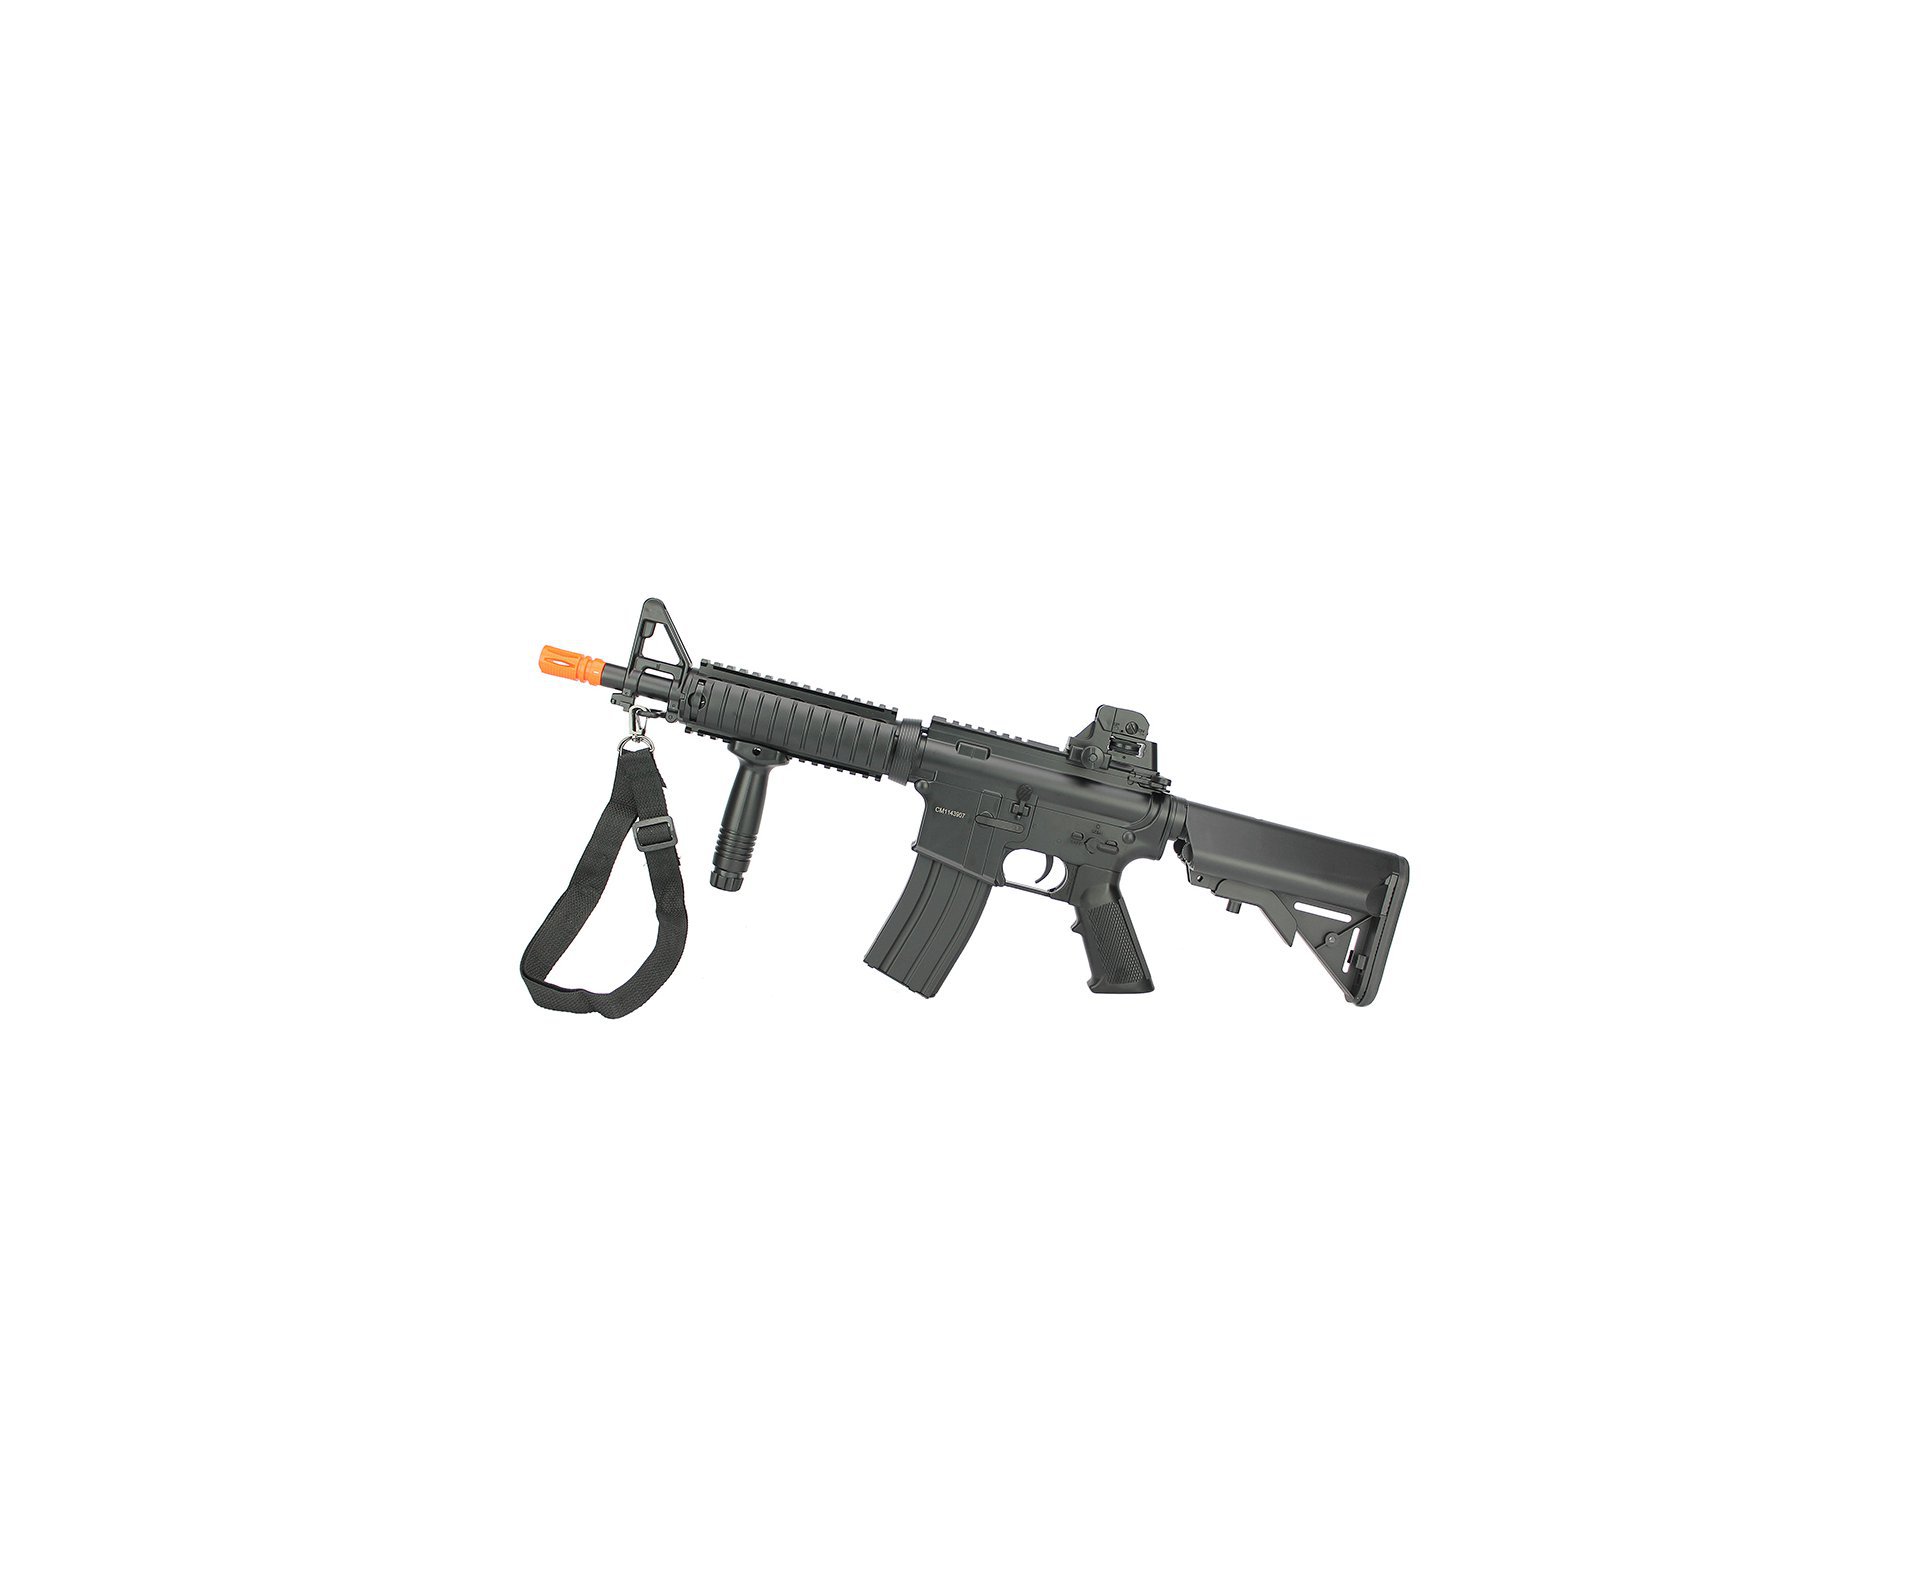 Rifle De Airsoft M4 Ris Cqb Cm176n Aeg Bivolt Cal 6mm - Cyma + Capa Simples + Esfera Plastica 0,20g 4000uni